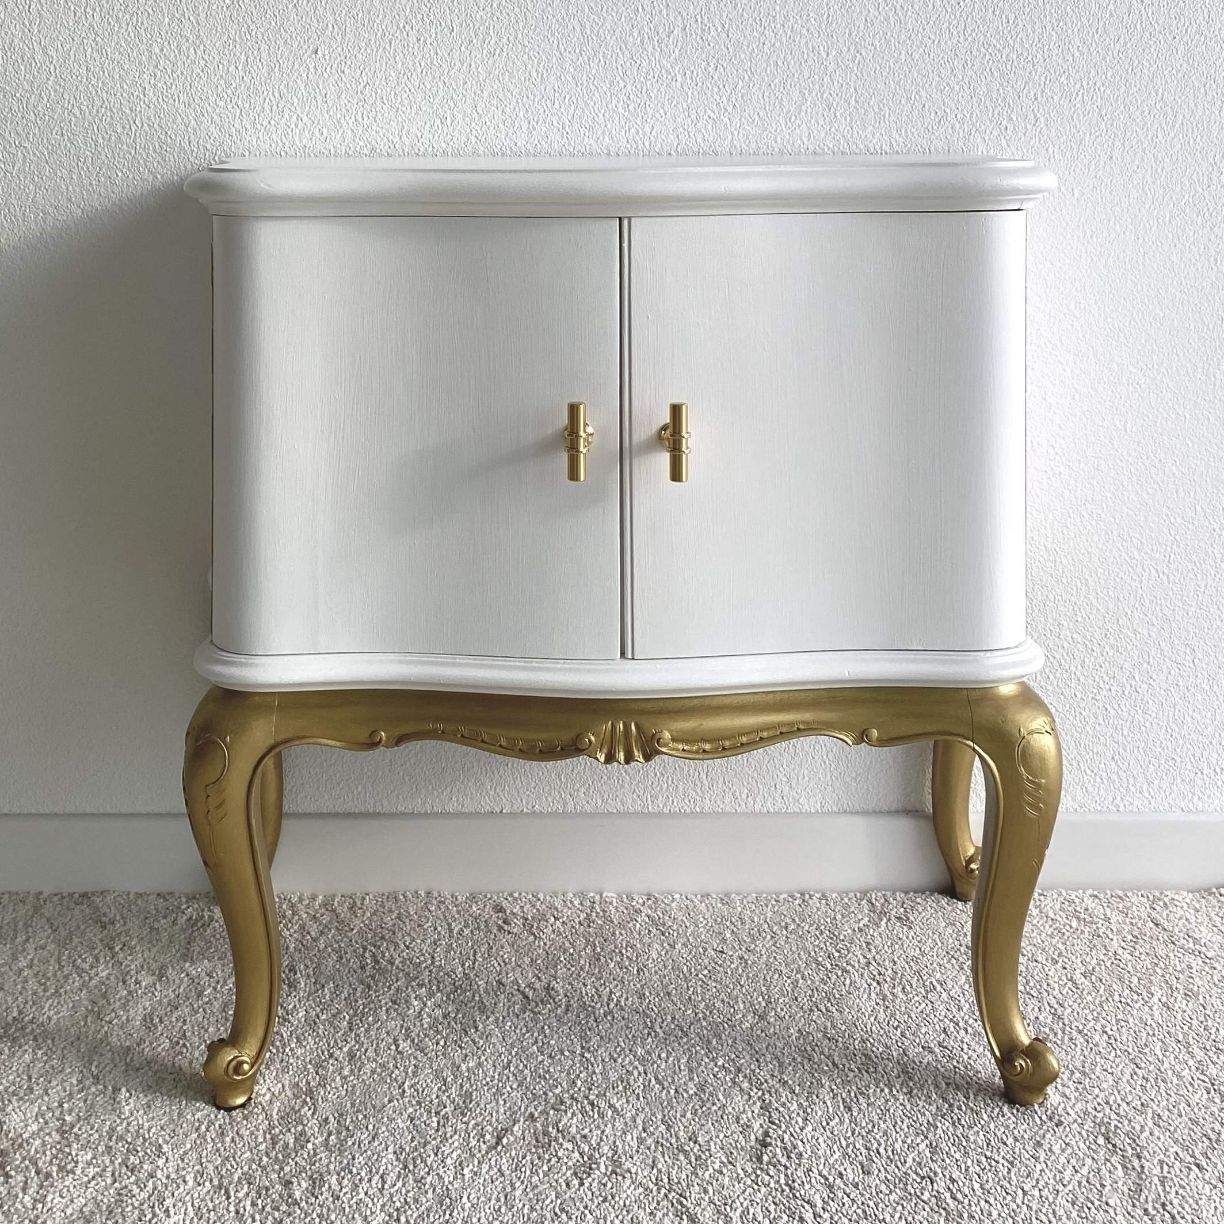 Furniture Shop Cozy Lugano, Shop Online Home Decor, Night Table Gold White Restyle, Interior Design